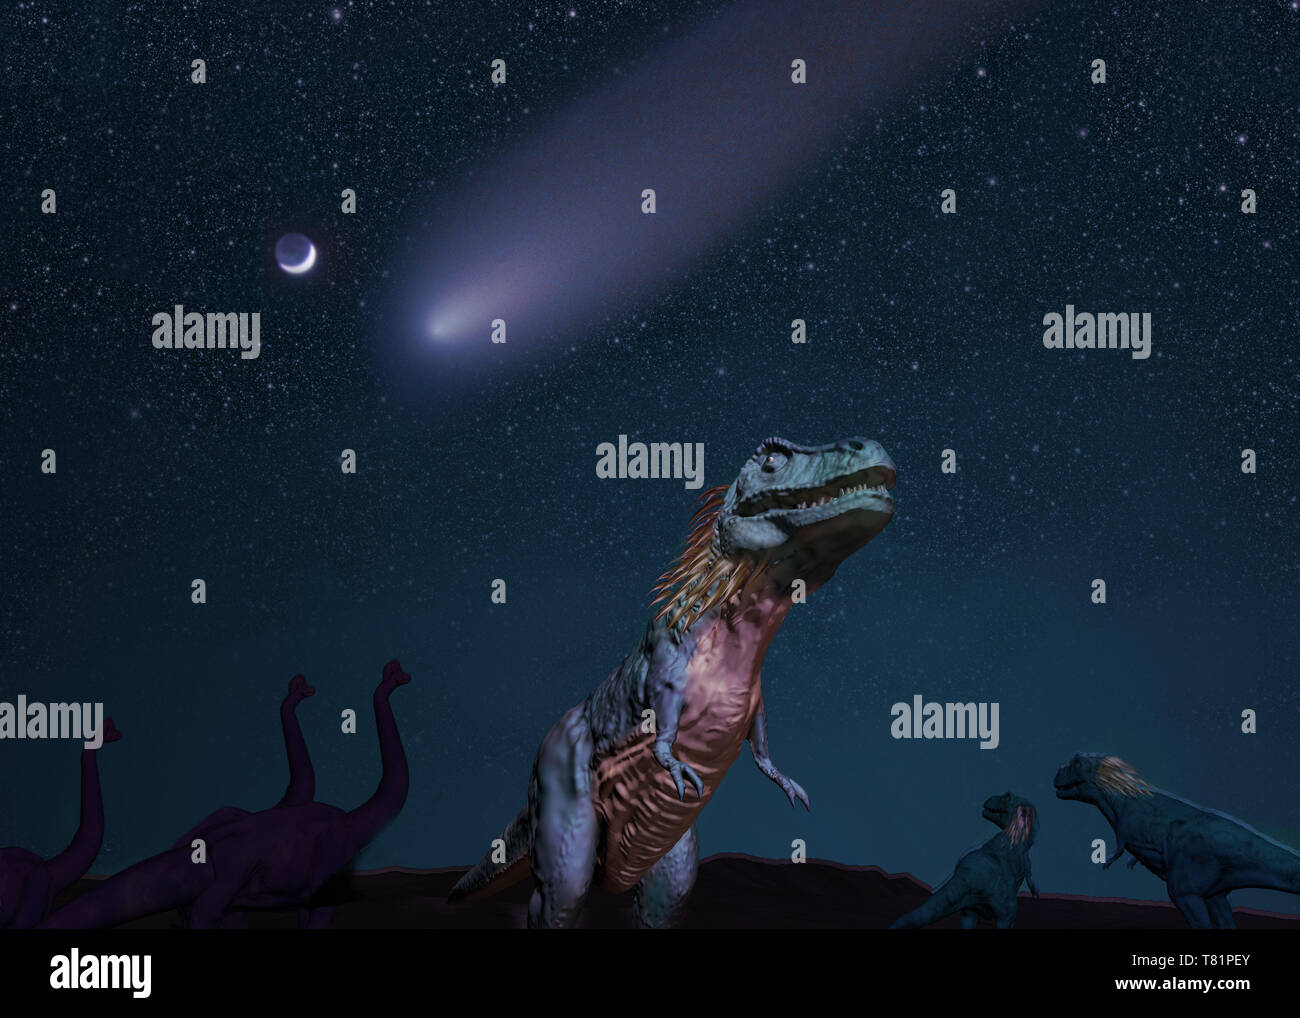 Asteroid and Dinosaurs, Illustration Stock Photo